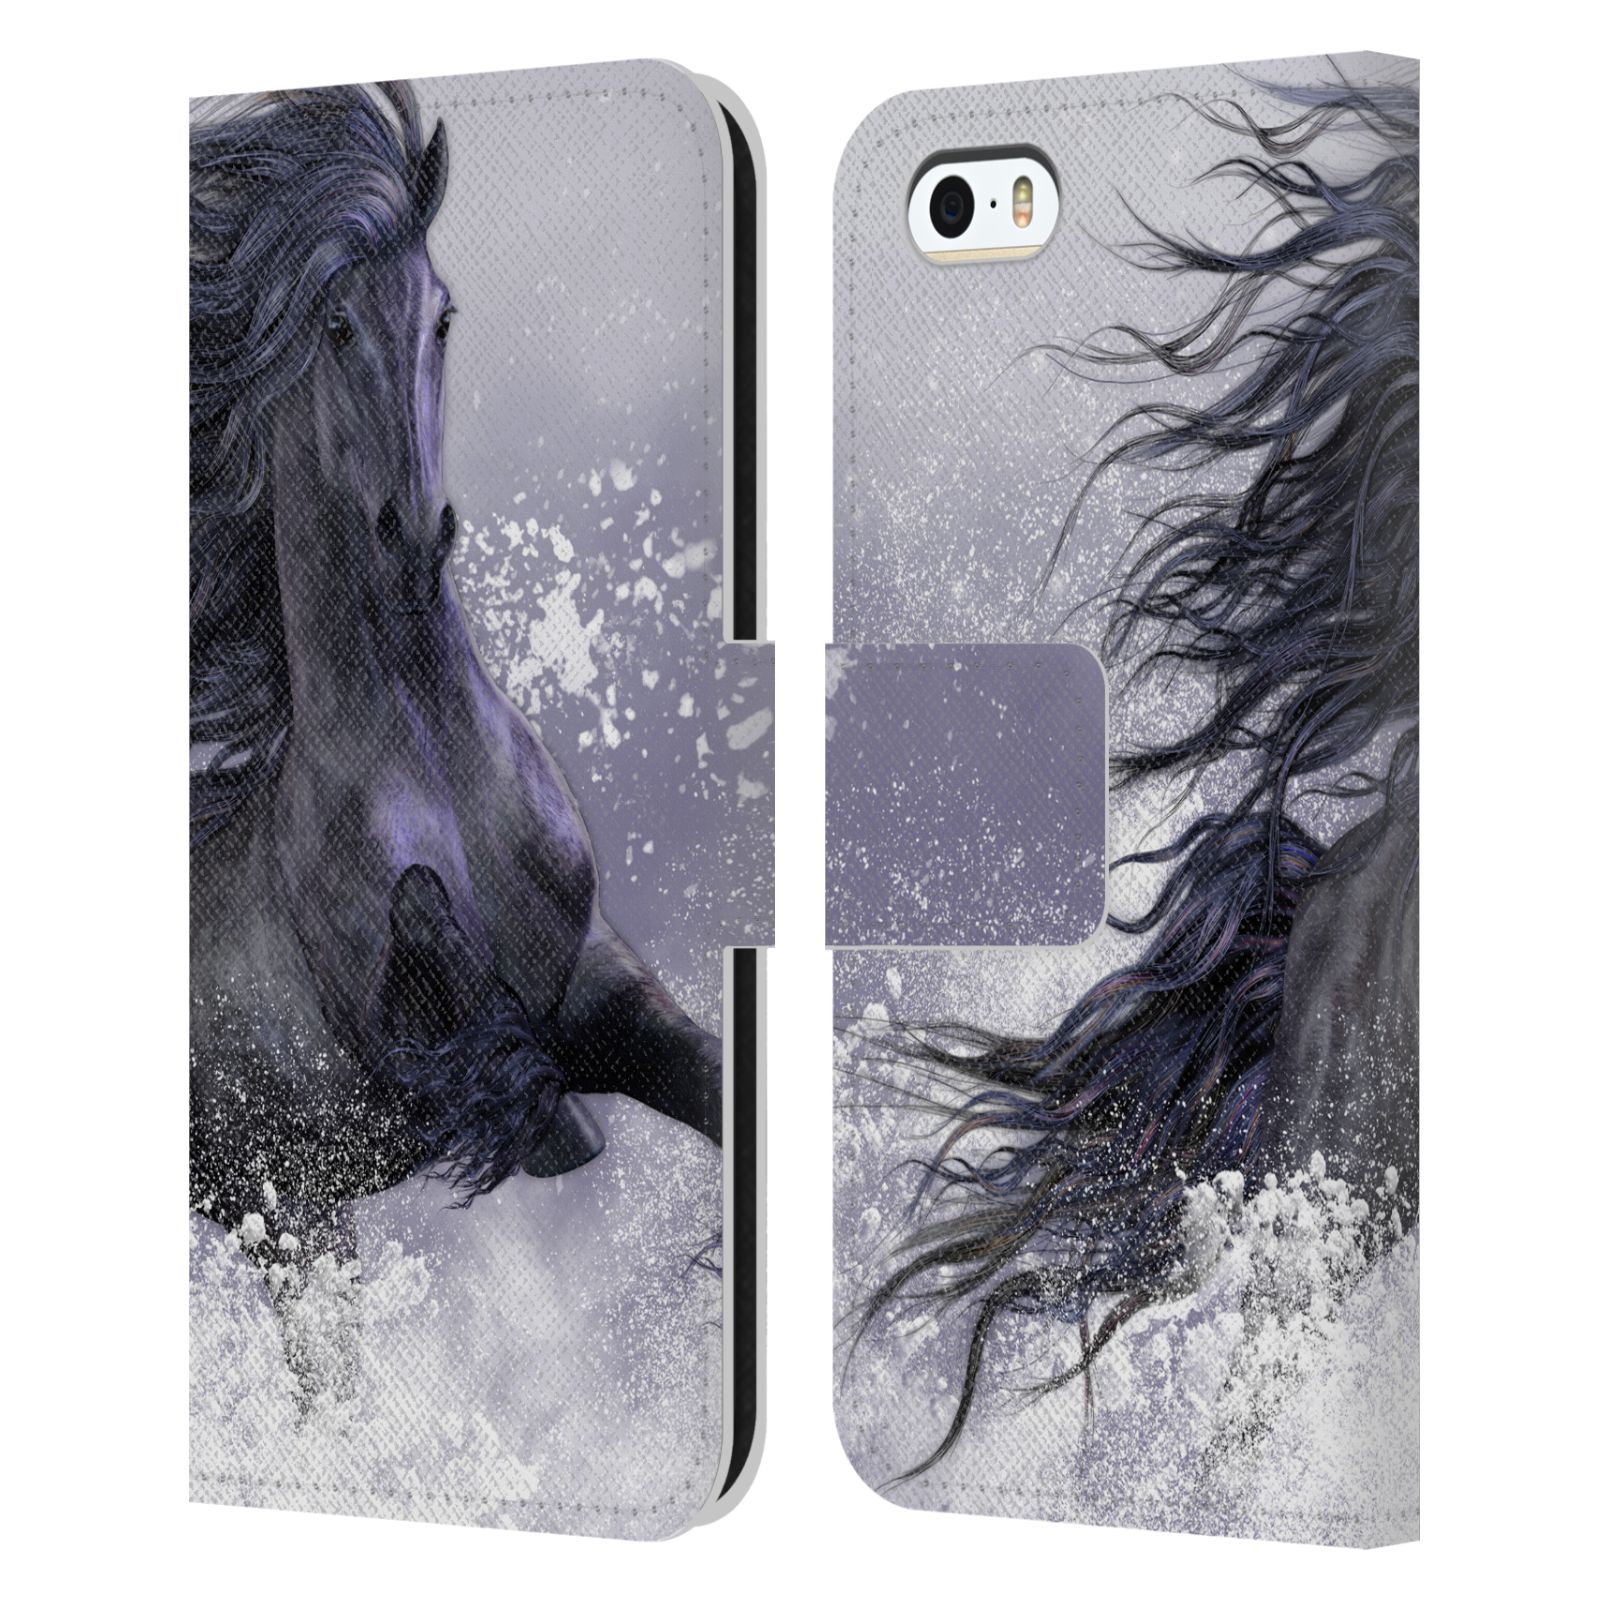 Pouzdro  pro mobil Apple Iphone 5 / 5S / SE 2015 - HEAD CASE - Kresba kůň Stallion